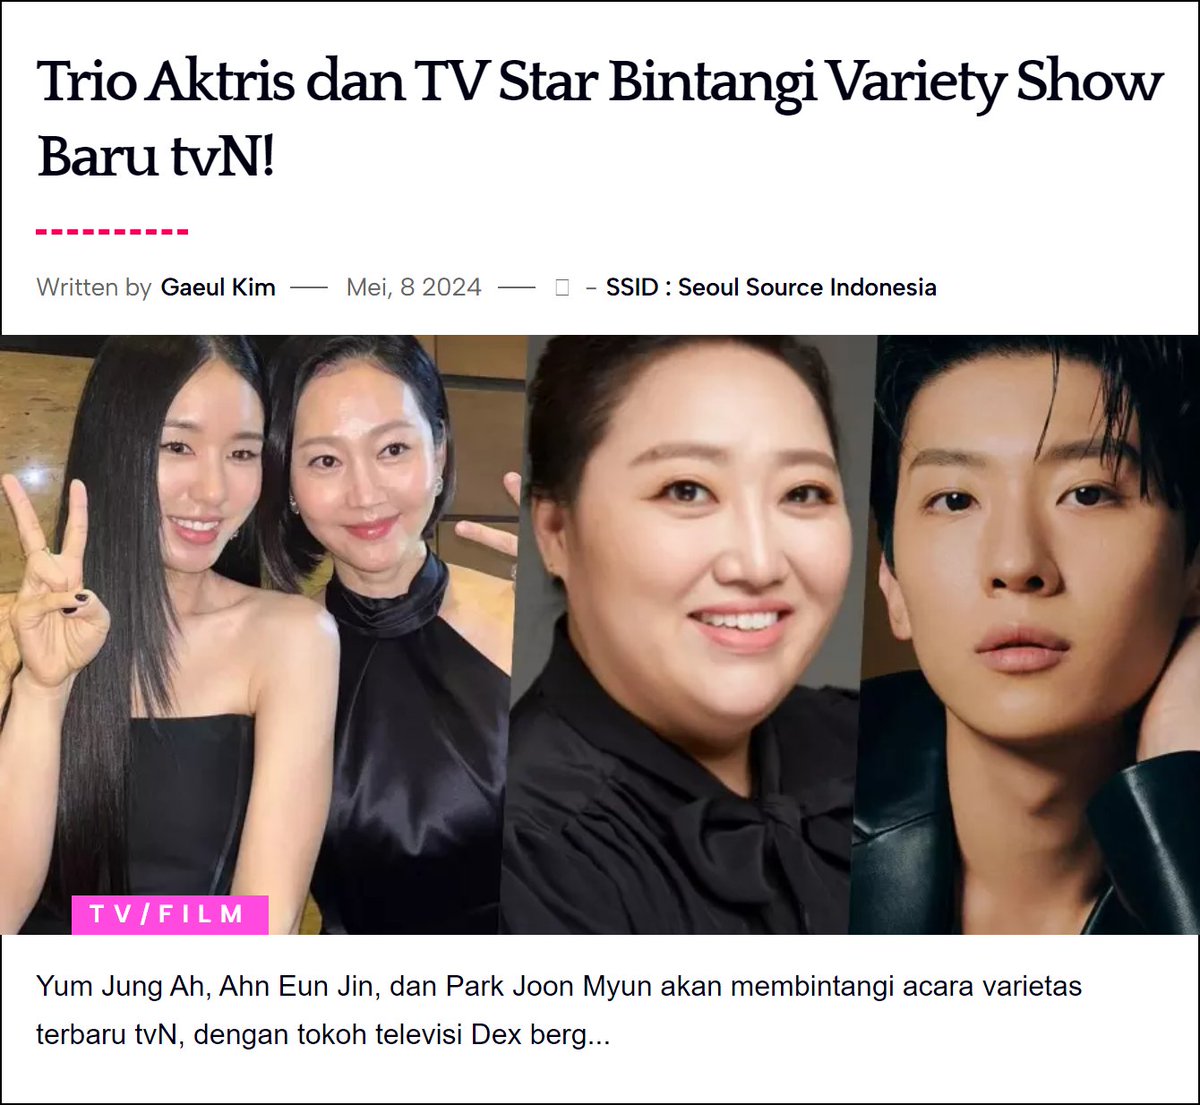 #TheSistersFarmToTable
#YumJungAh
#AhnEunJin
#ParkJoonMyun
Baca: seoulsourceid.rf.gd/trio-aktris-da…
Kim Gaeul 🍂